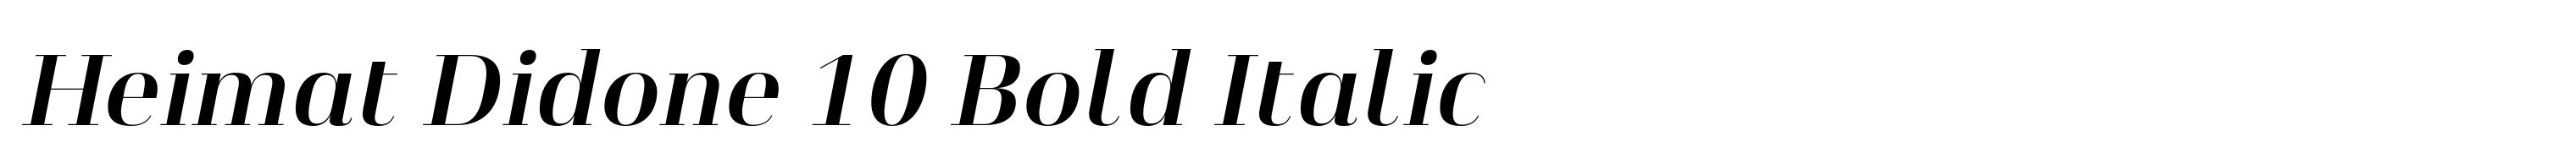 Heimat Didone 10 Bold Italic